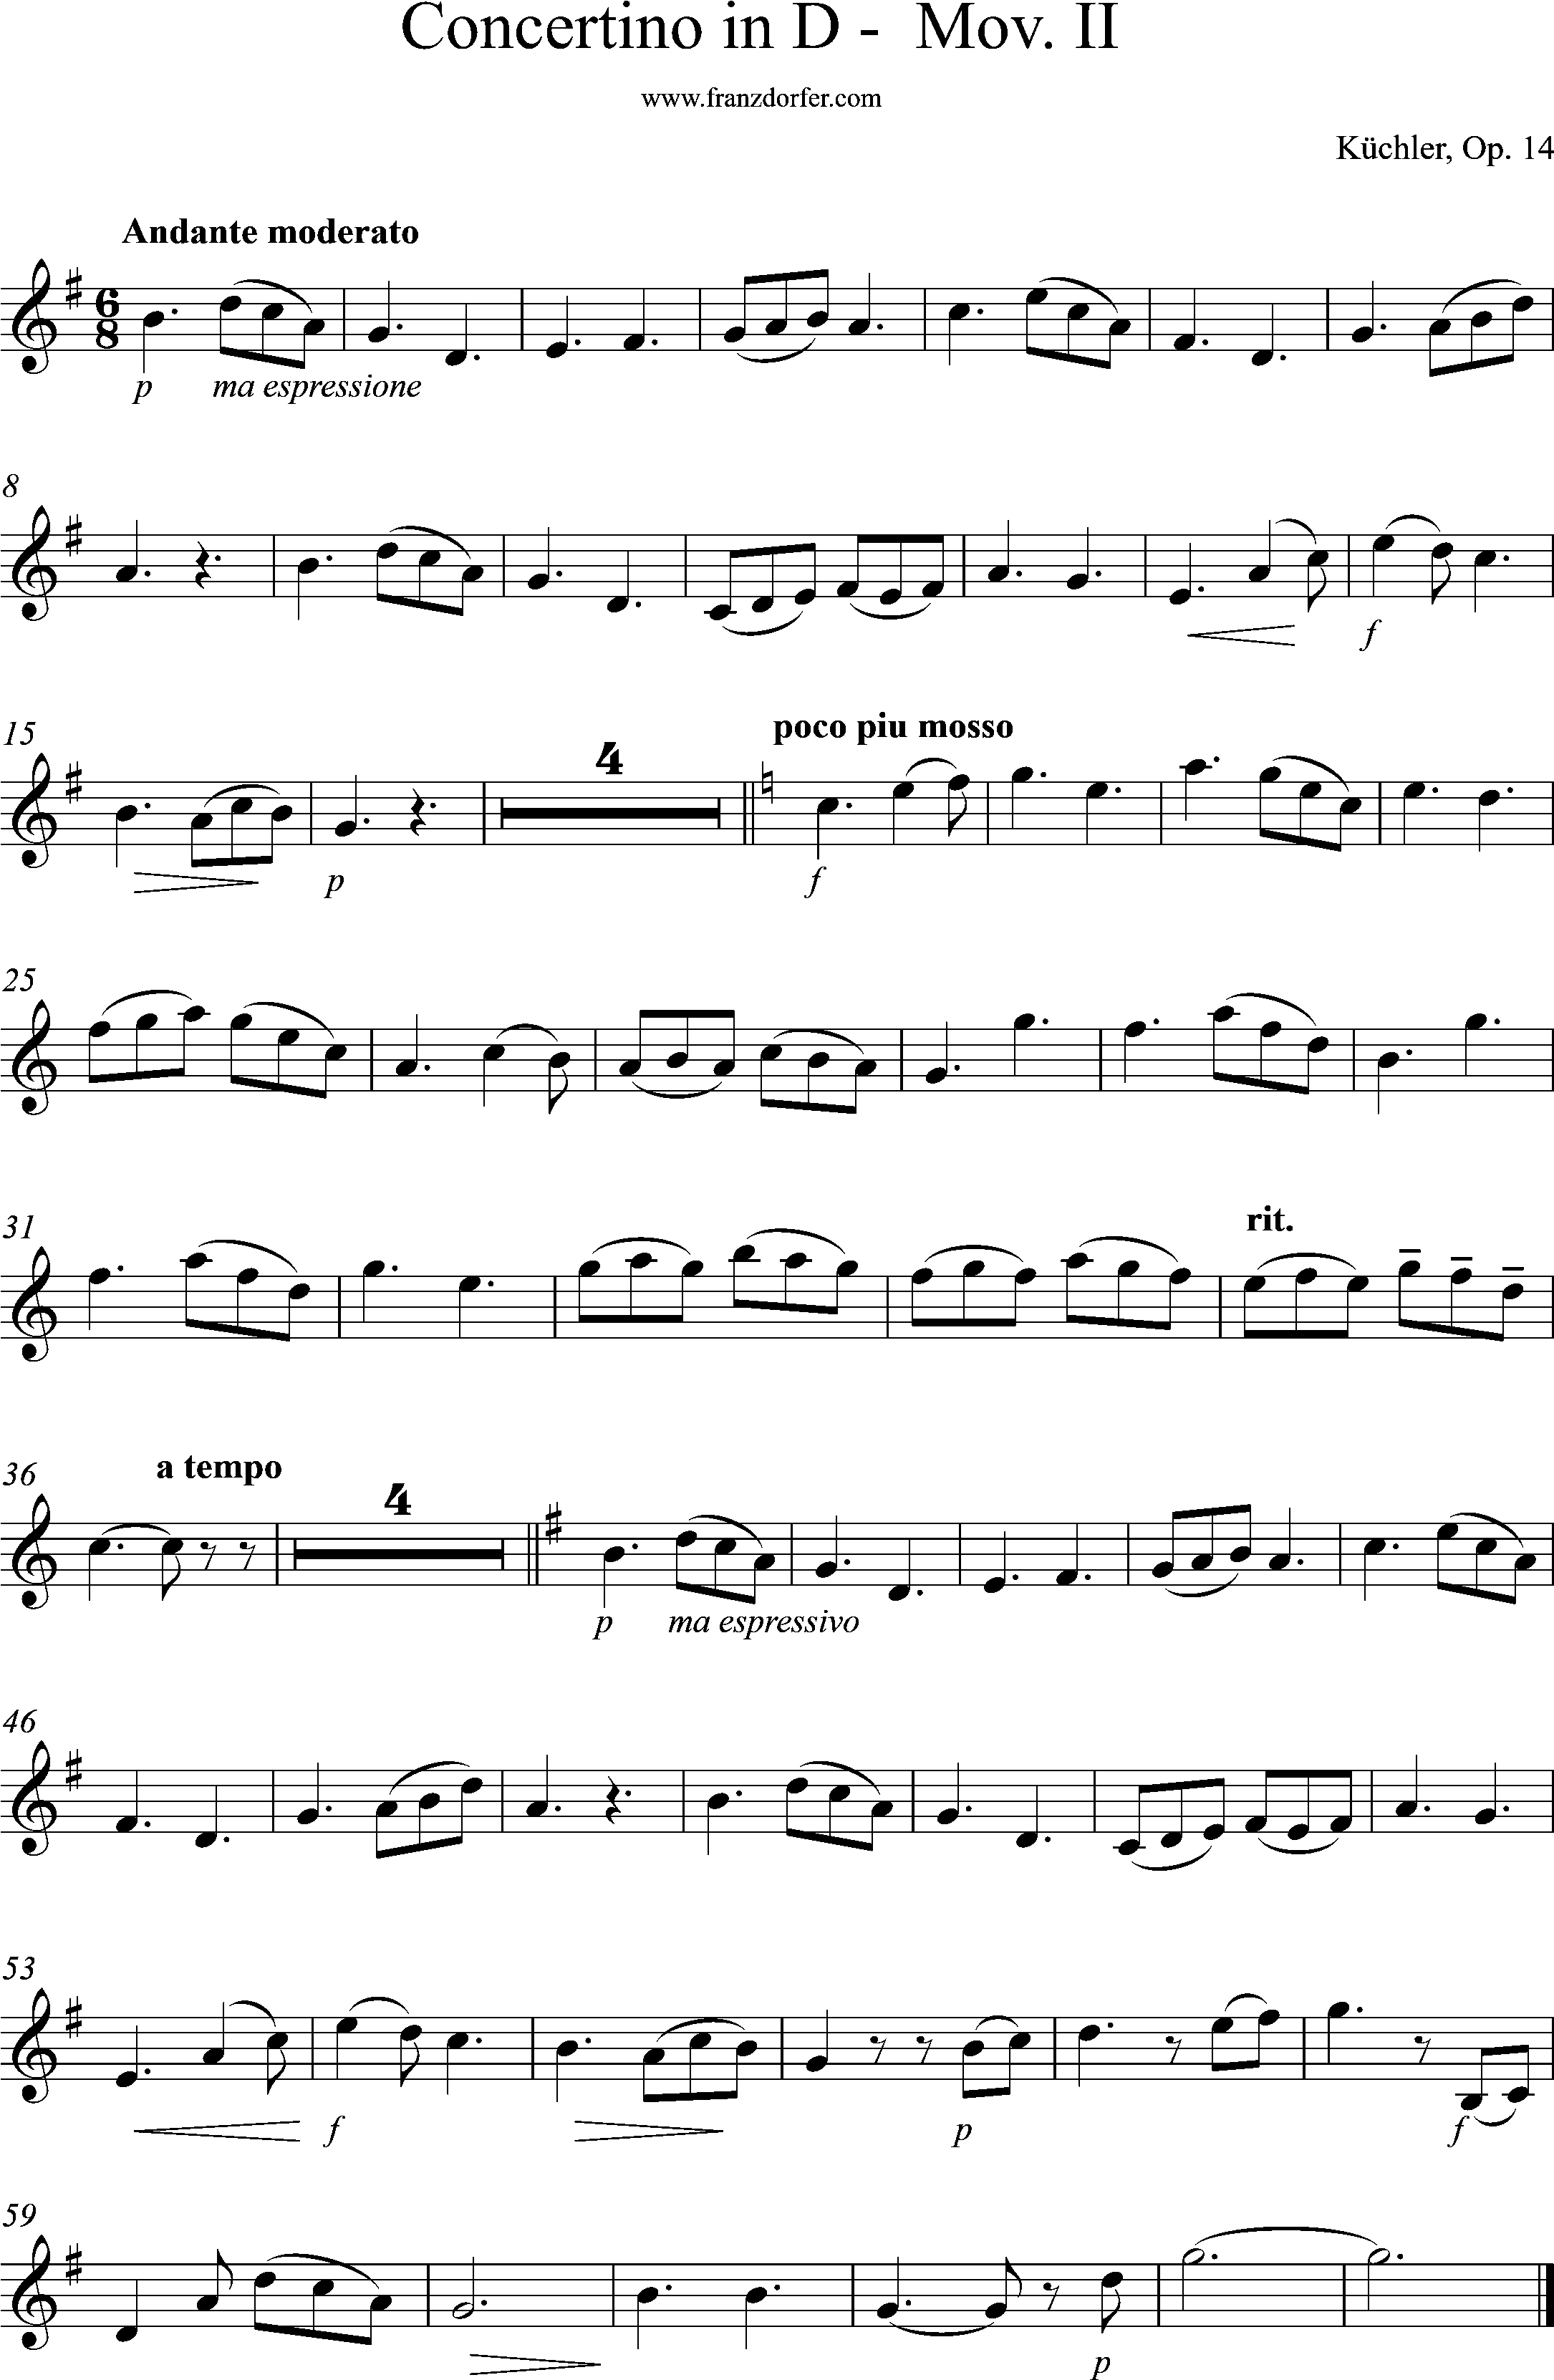 Küchler, Op. 14, Mov. II, Andante moderato,